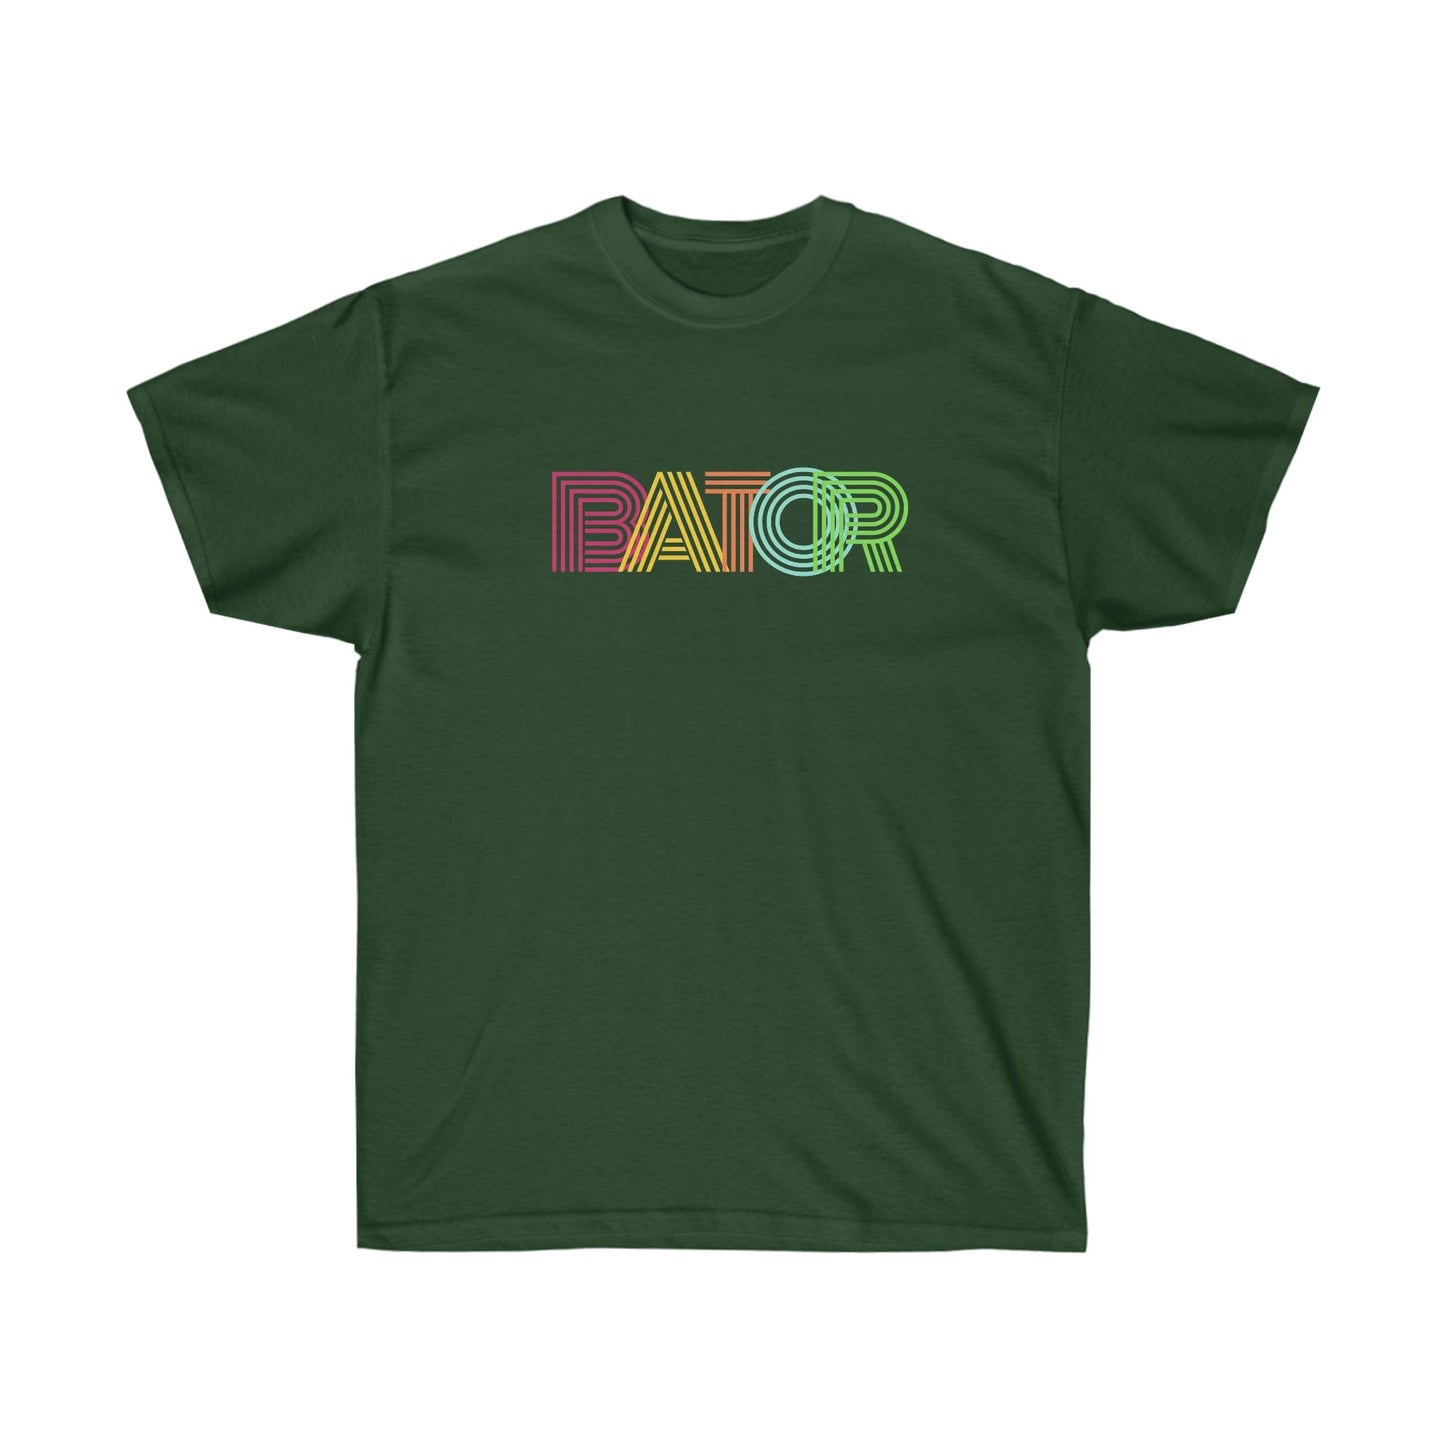 T-Shirt Forest Green / S Retro Bator LEATHERDADDY BATOR